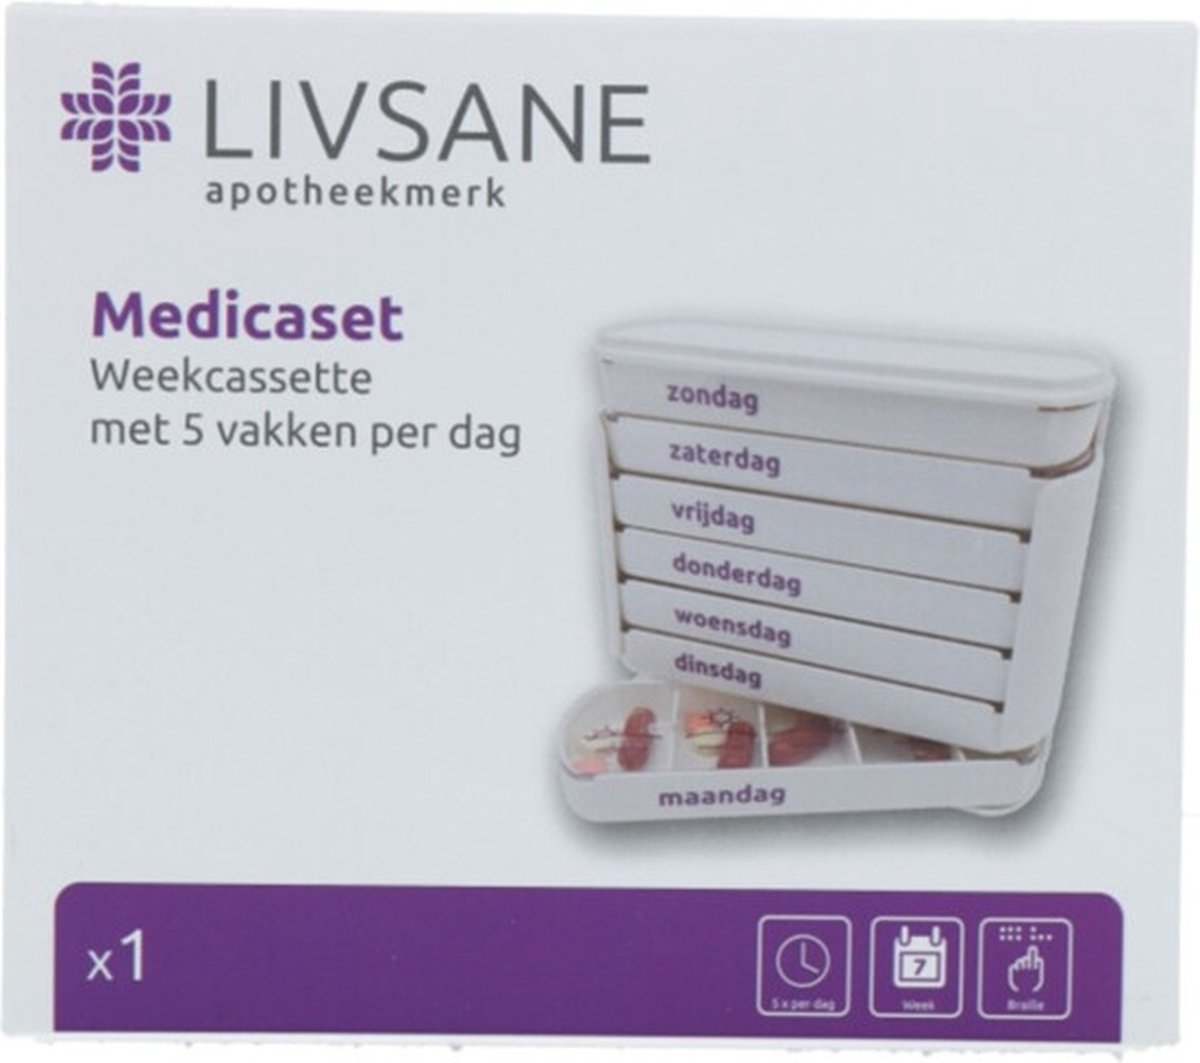 Medicaset Medicijnbox - Medicijndoos